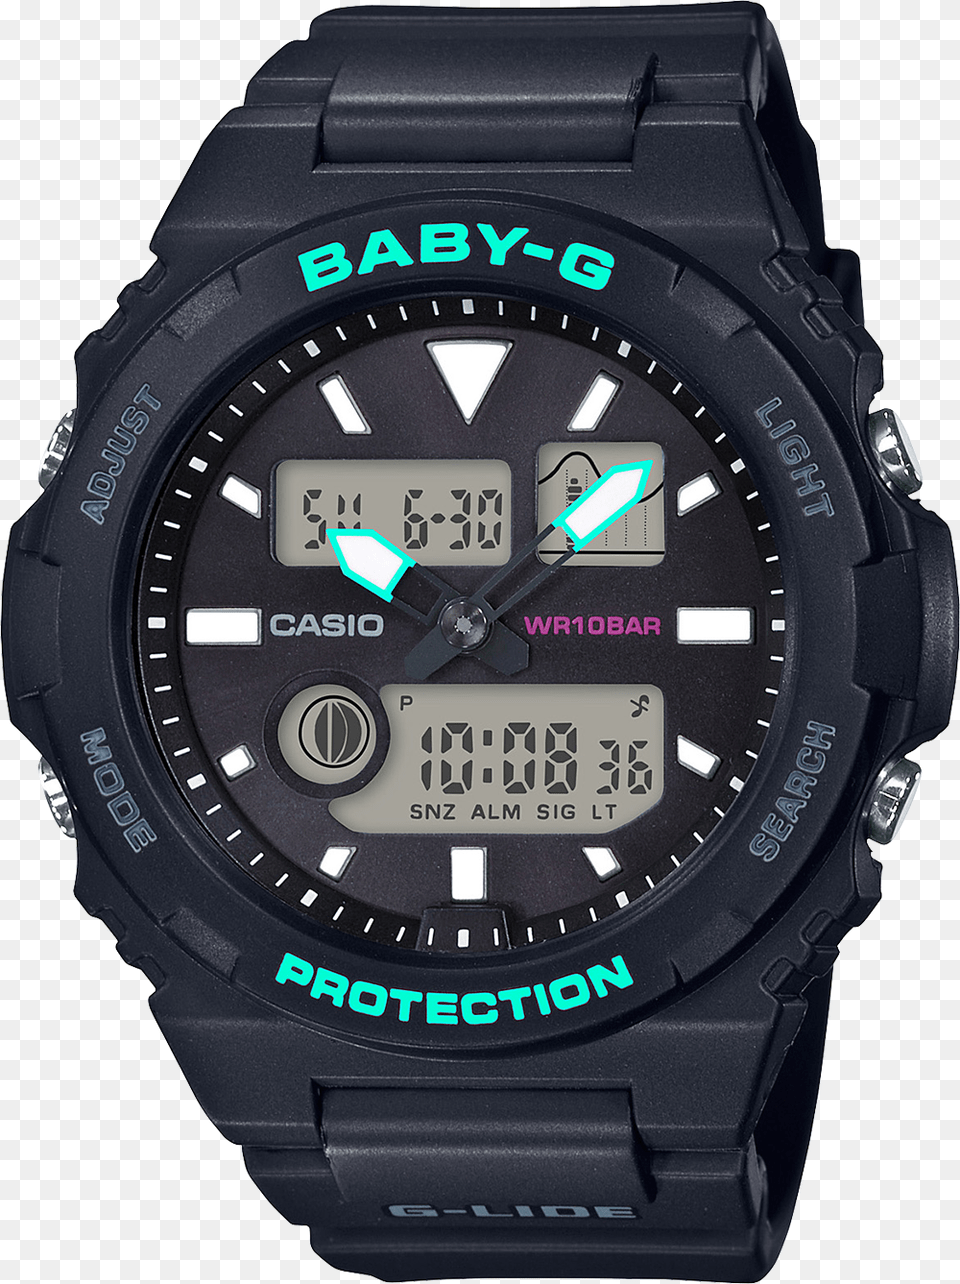 Casio Baby G Bax 100 1aer Bax100, Wristwatch, Digital Watch, Electronics, Person Free Transparent Png